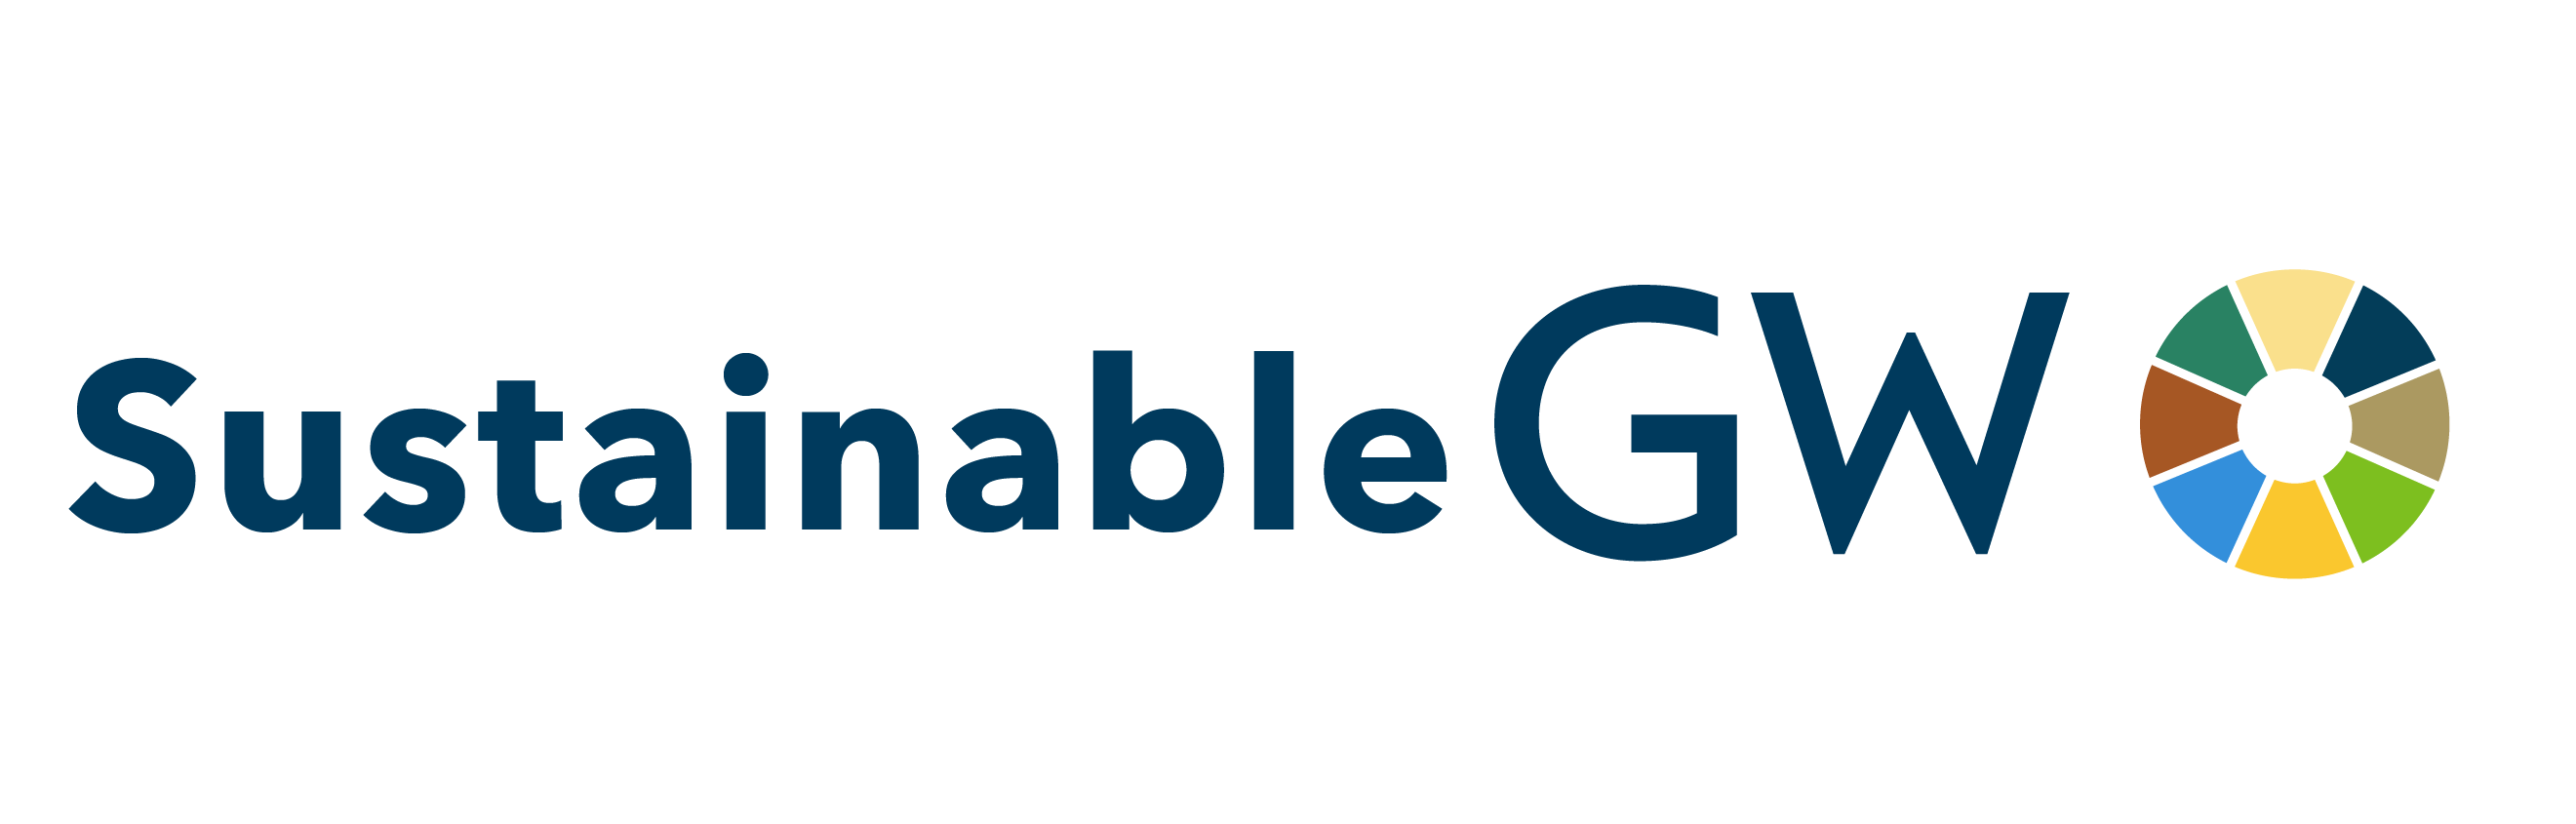 Sustainable GW site logo